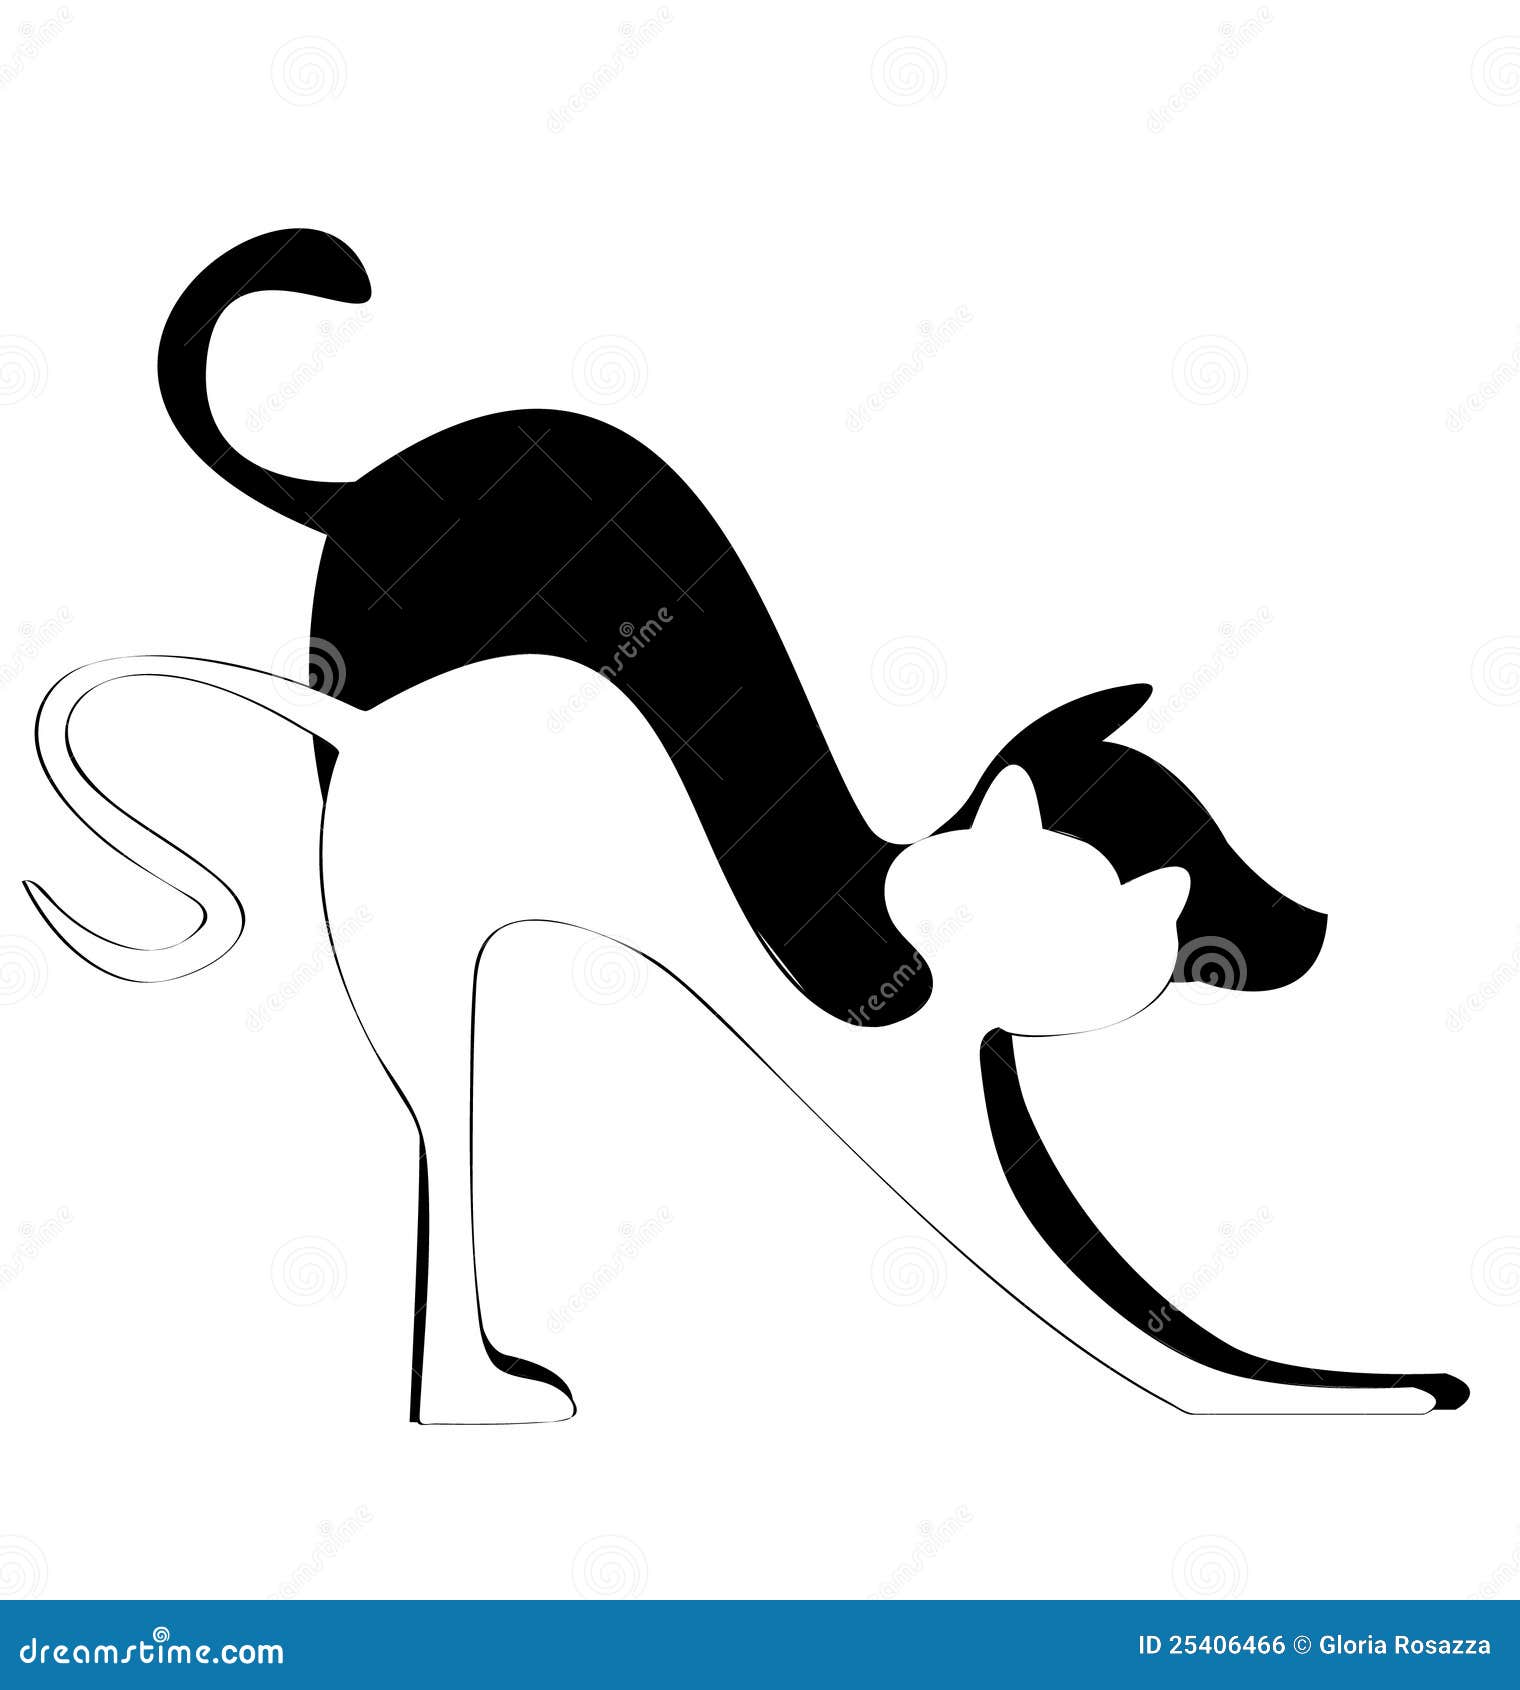 Dog And Cat Together Logo Royalty Free Stock Image - Image ...